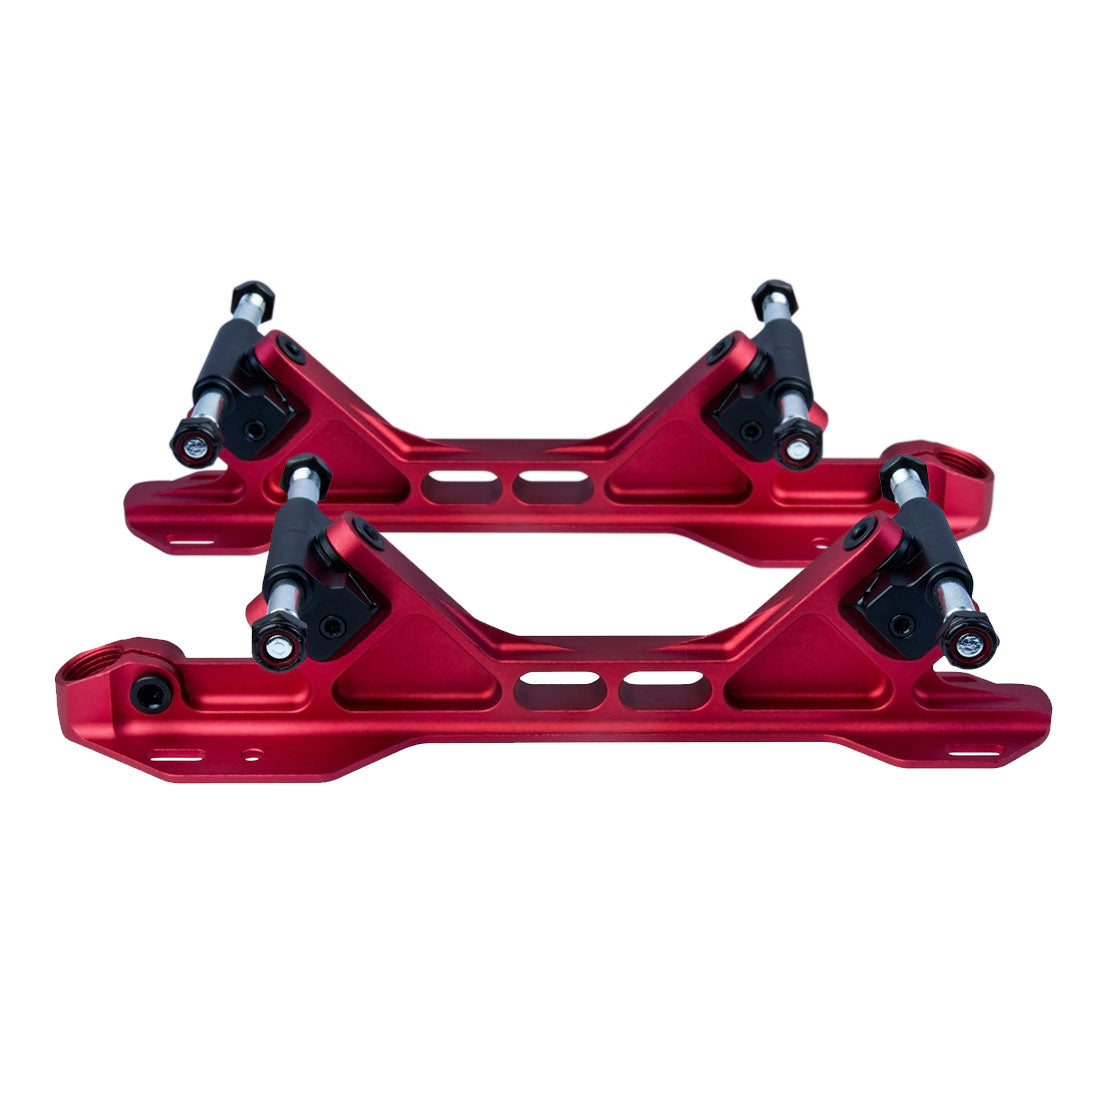 Powerdyne Arius Plate - Red Roller Skate Plates